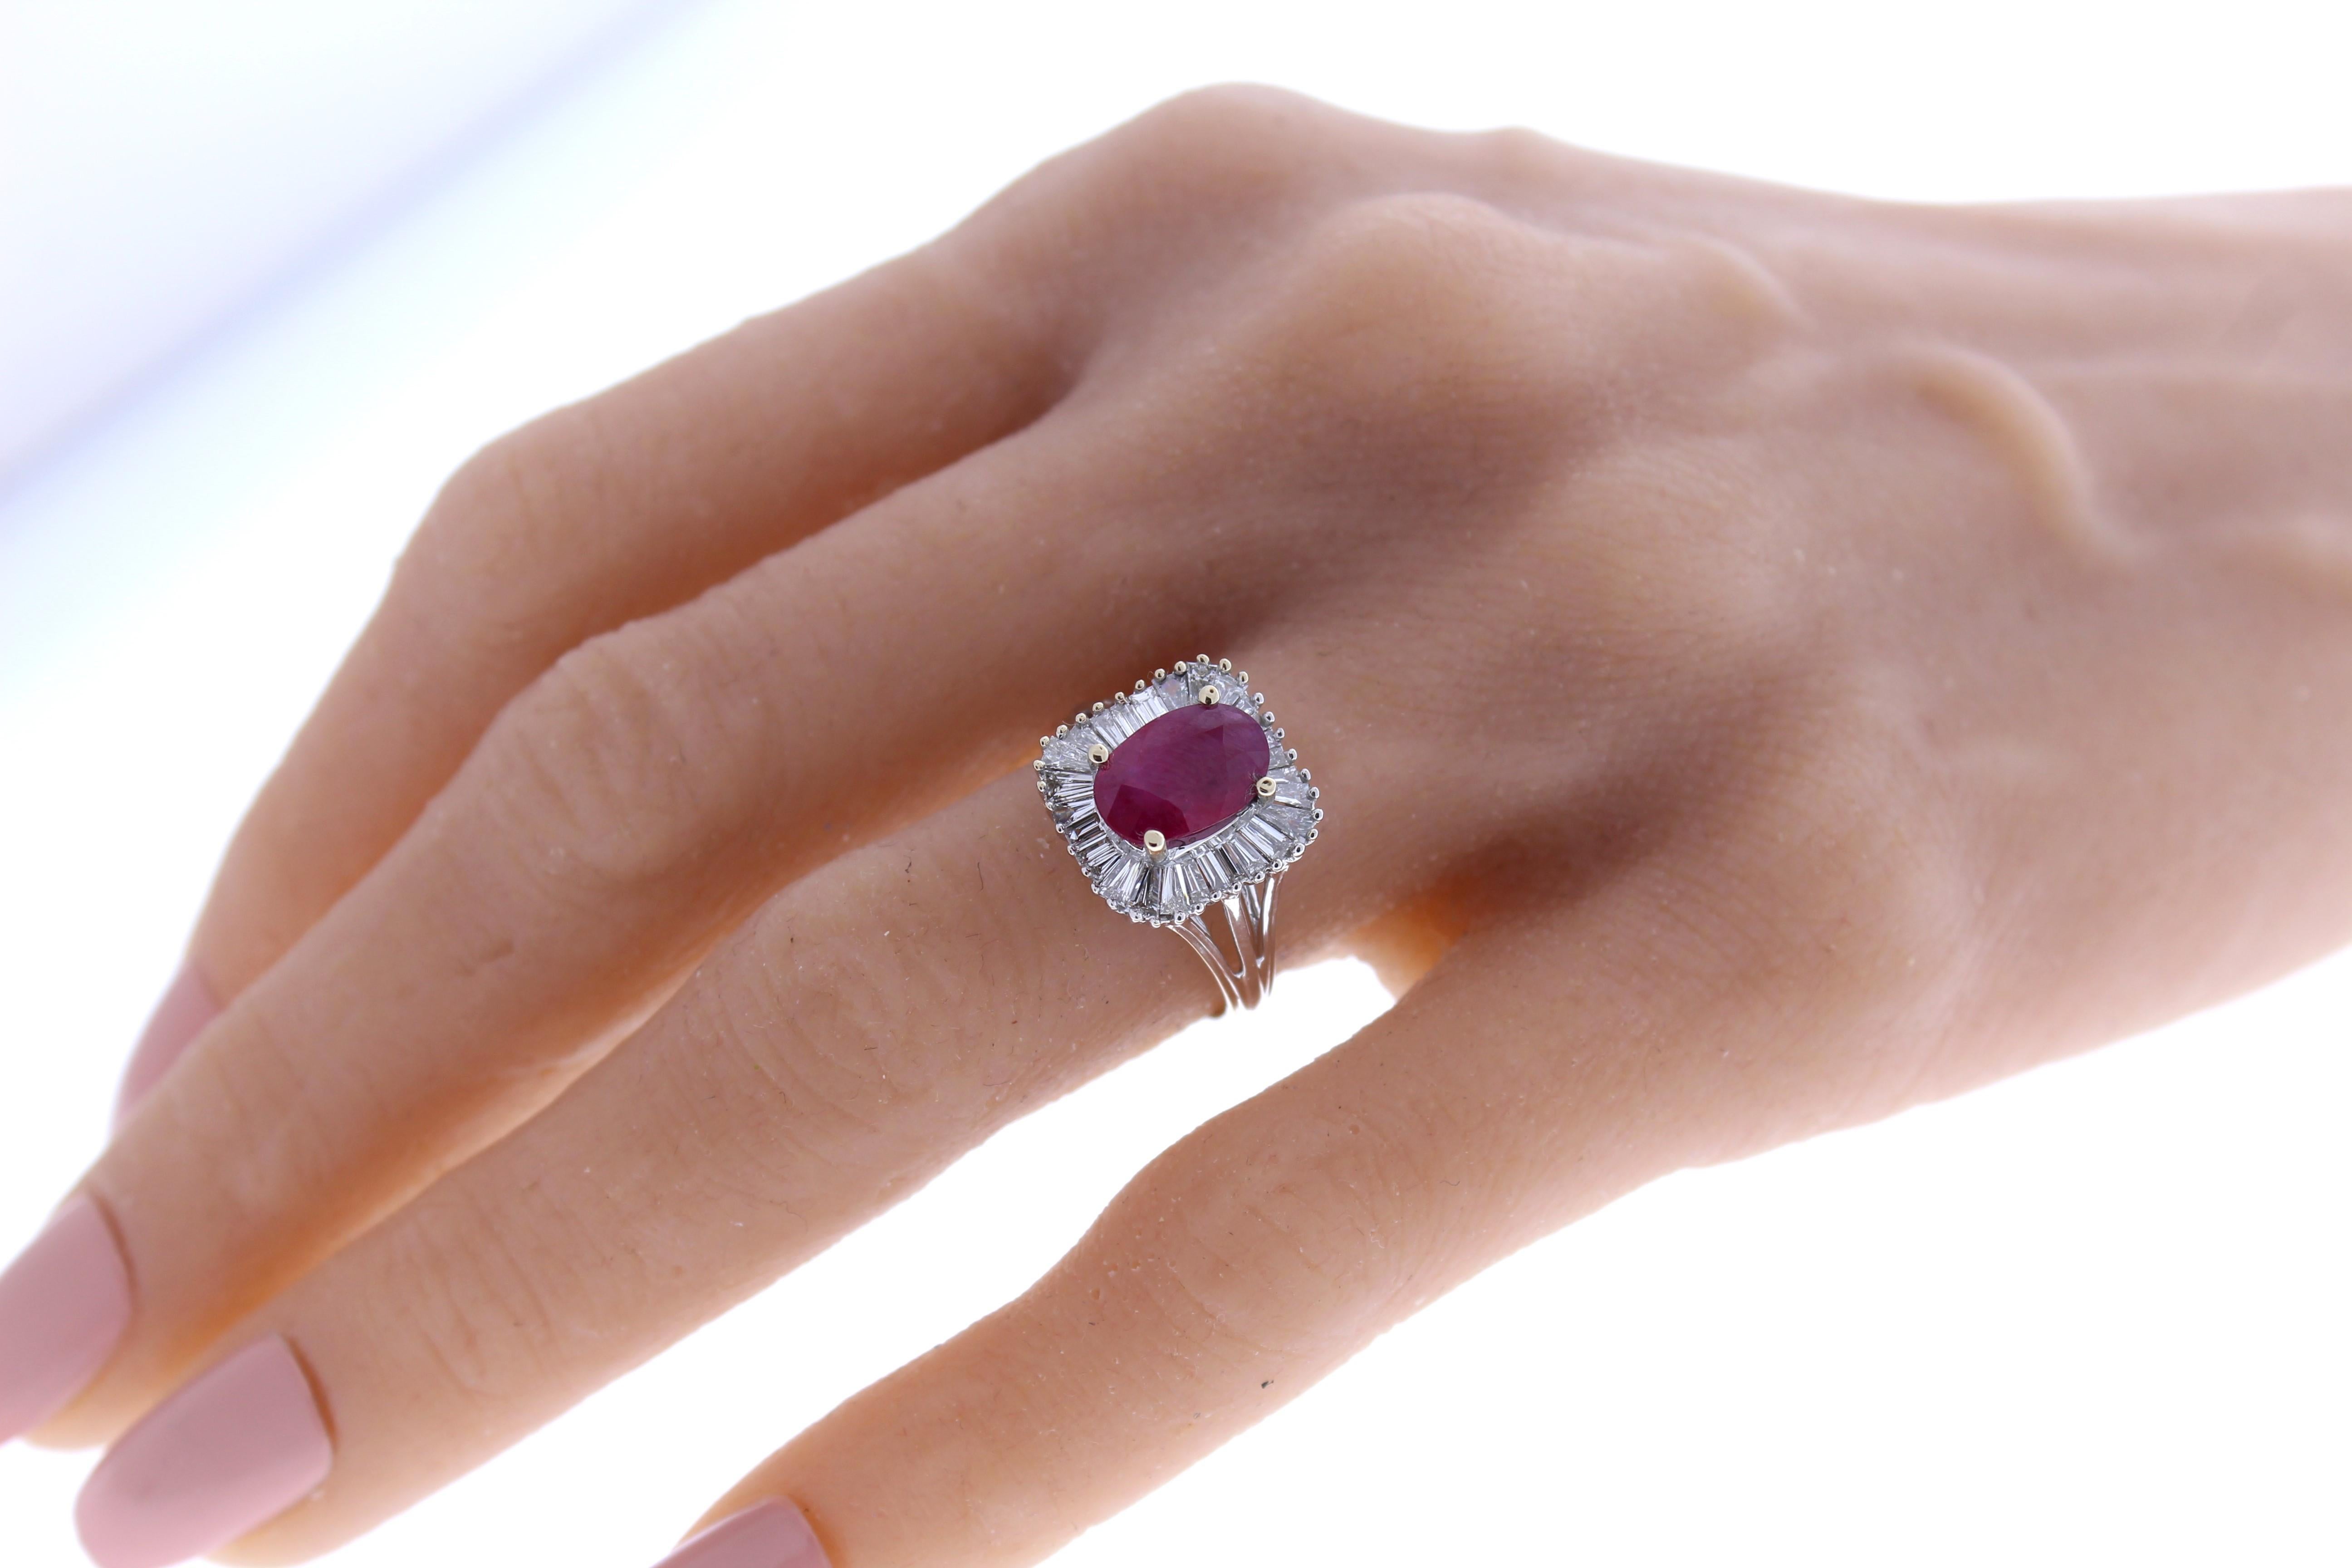 Oval Cut 2.02 Carat Weight Oval Shape Ruby & Baguette Diamond Fashion Ring in 18k WG For Sale